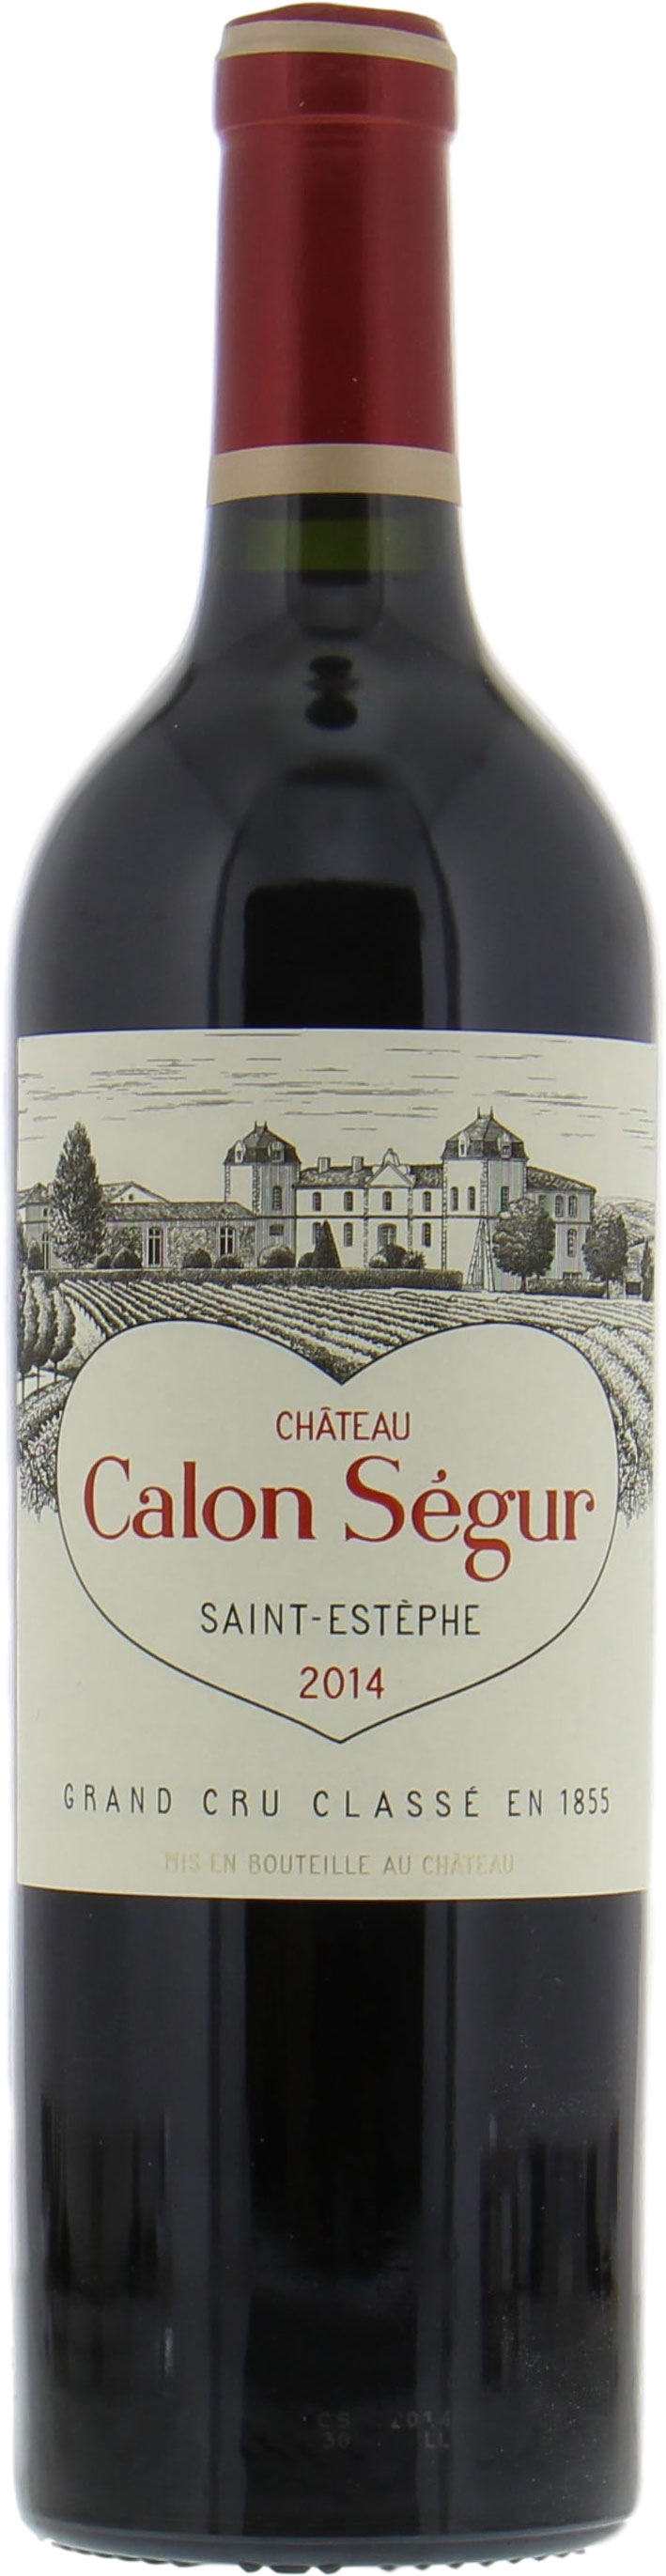 Chateau Calon Segur - Chateau Calon Segur 2014 Perfect